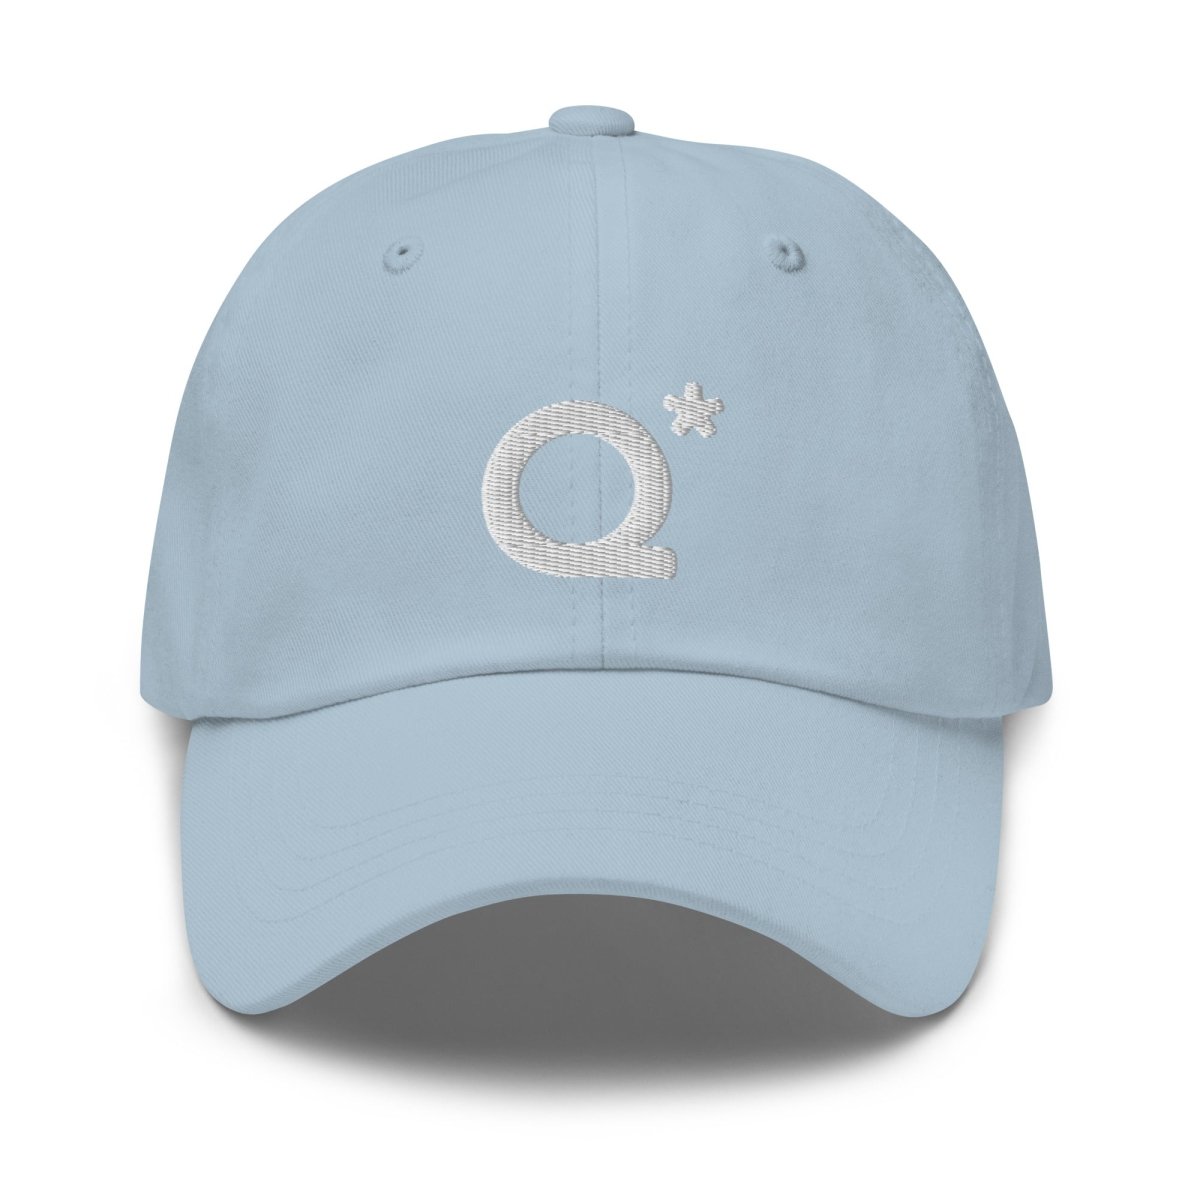 Q* (Q - Star) Embroidered Cap 1 - Light Blue - AI Store